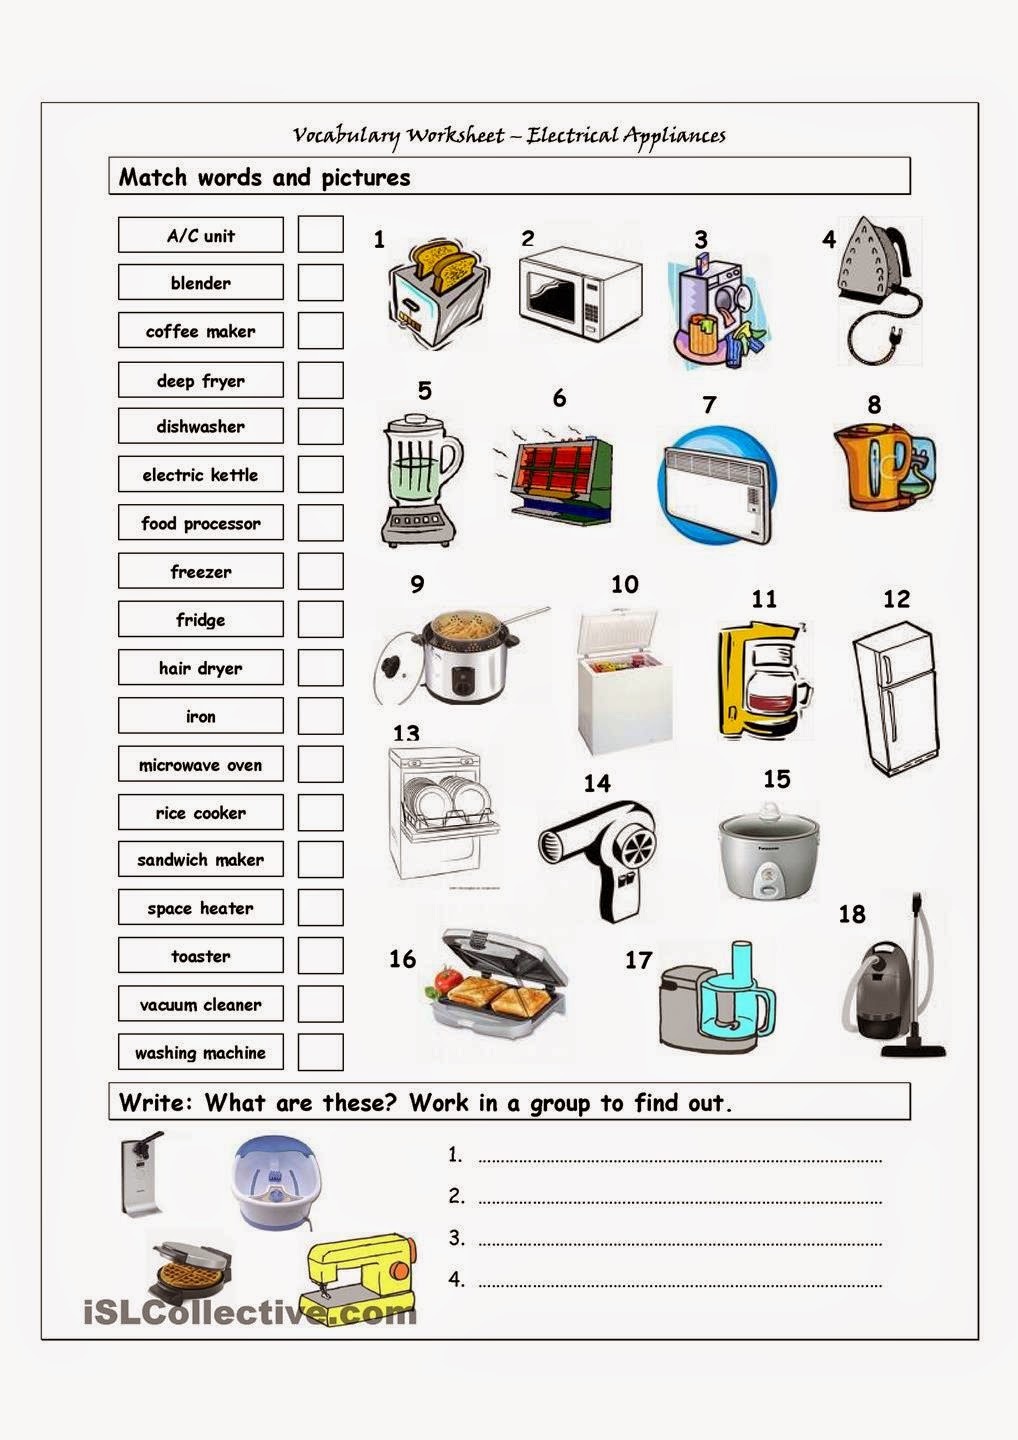 Household appliances english vocabulary